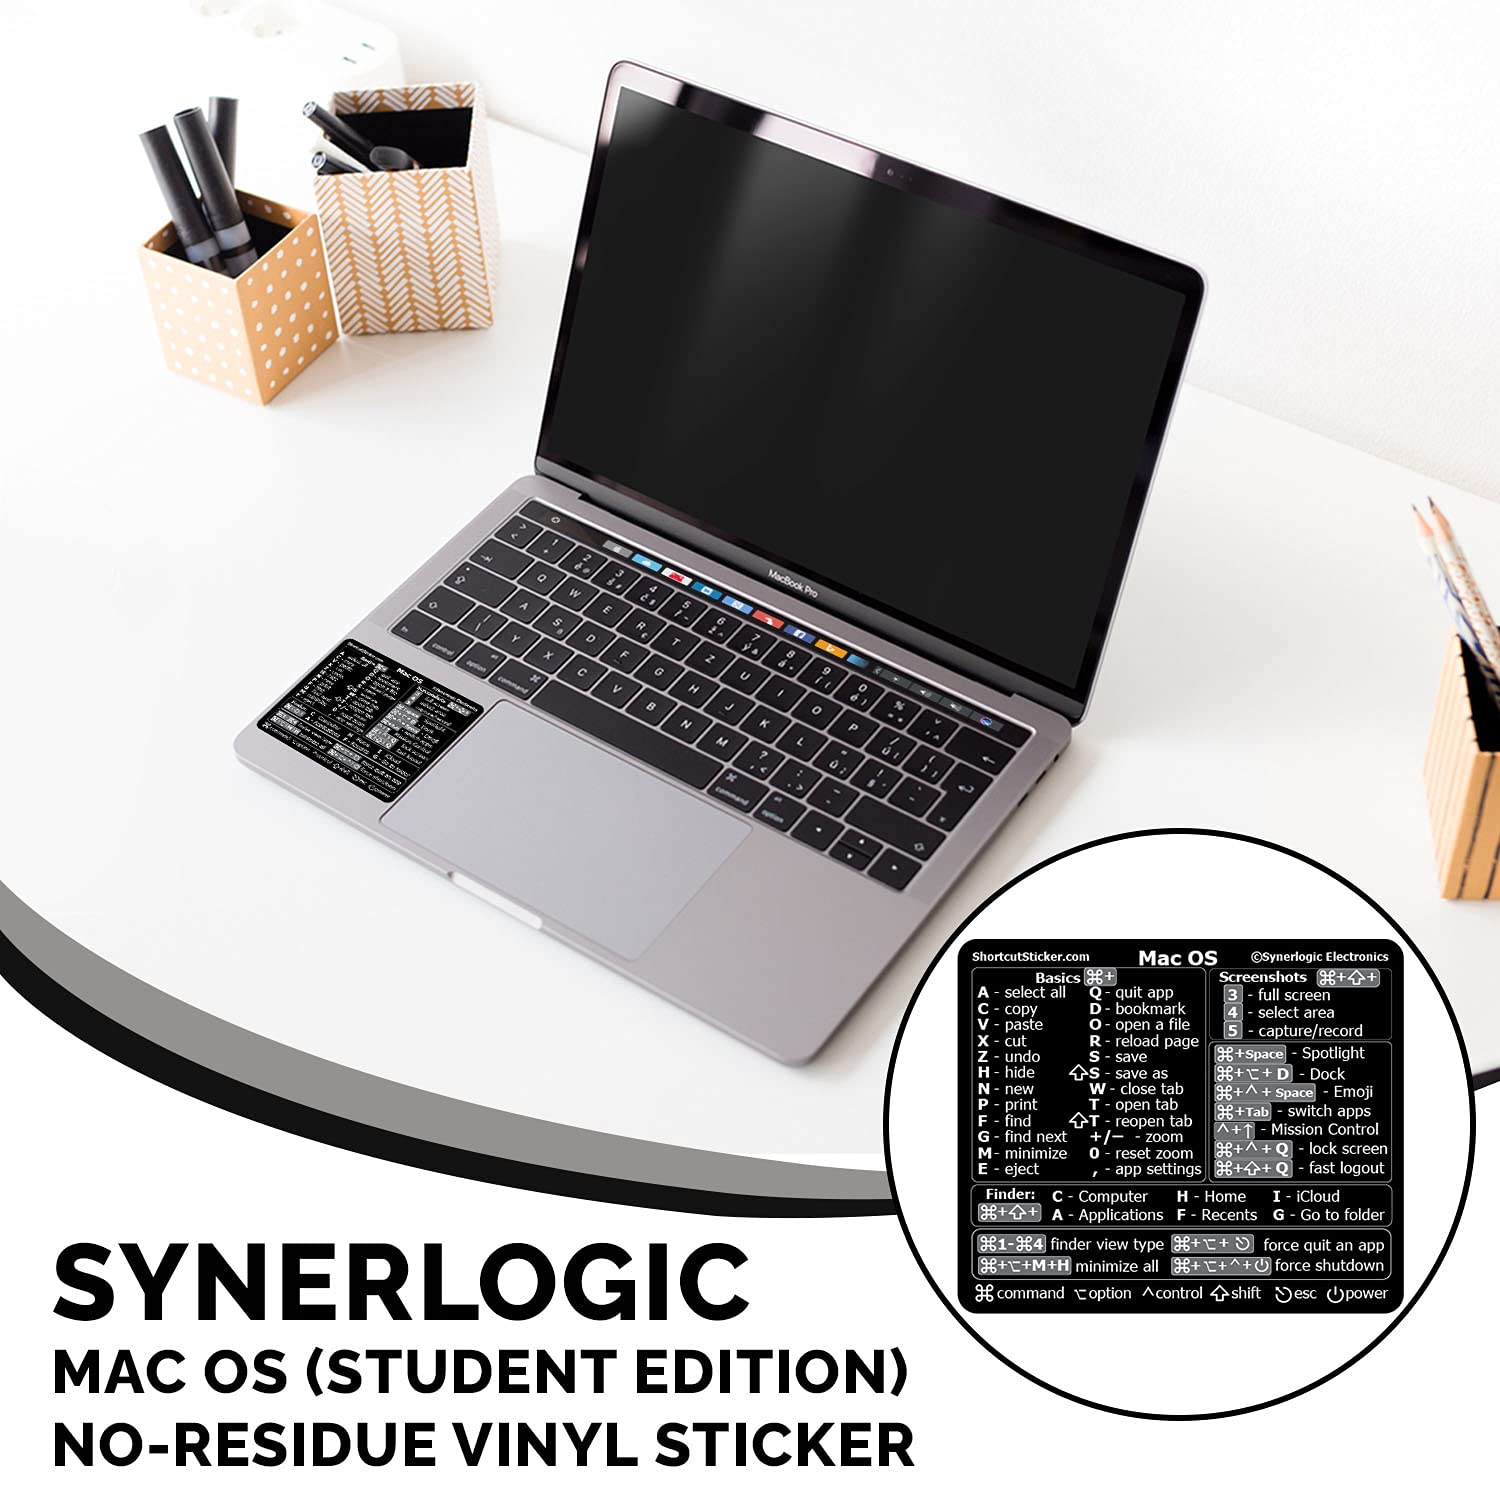 SYNERLOGIC (Universal for Mac) Mac OS Reference Keyboard Shortcut Sticker, No-Residue Laminated Vinyl - for Any MacBook Air/Pro/iMac/Mini (Black)